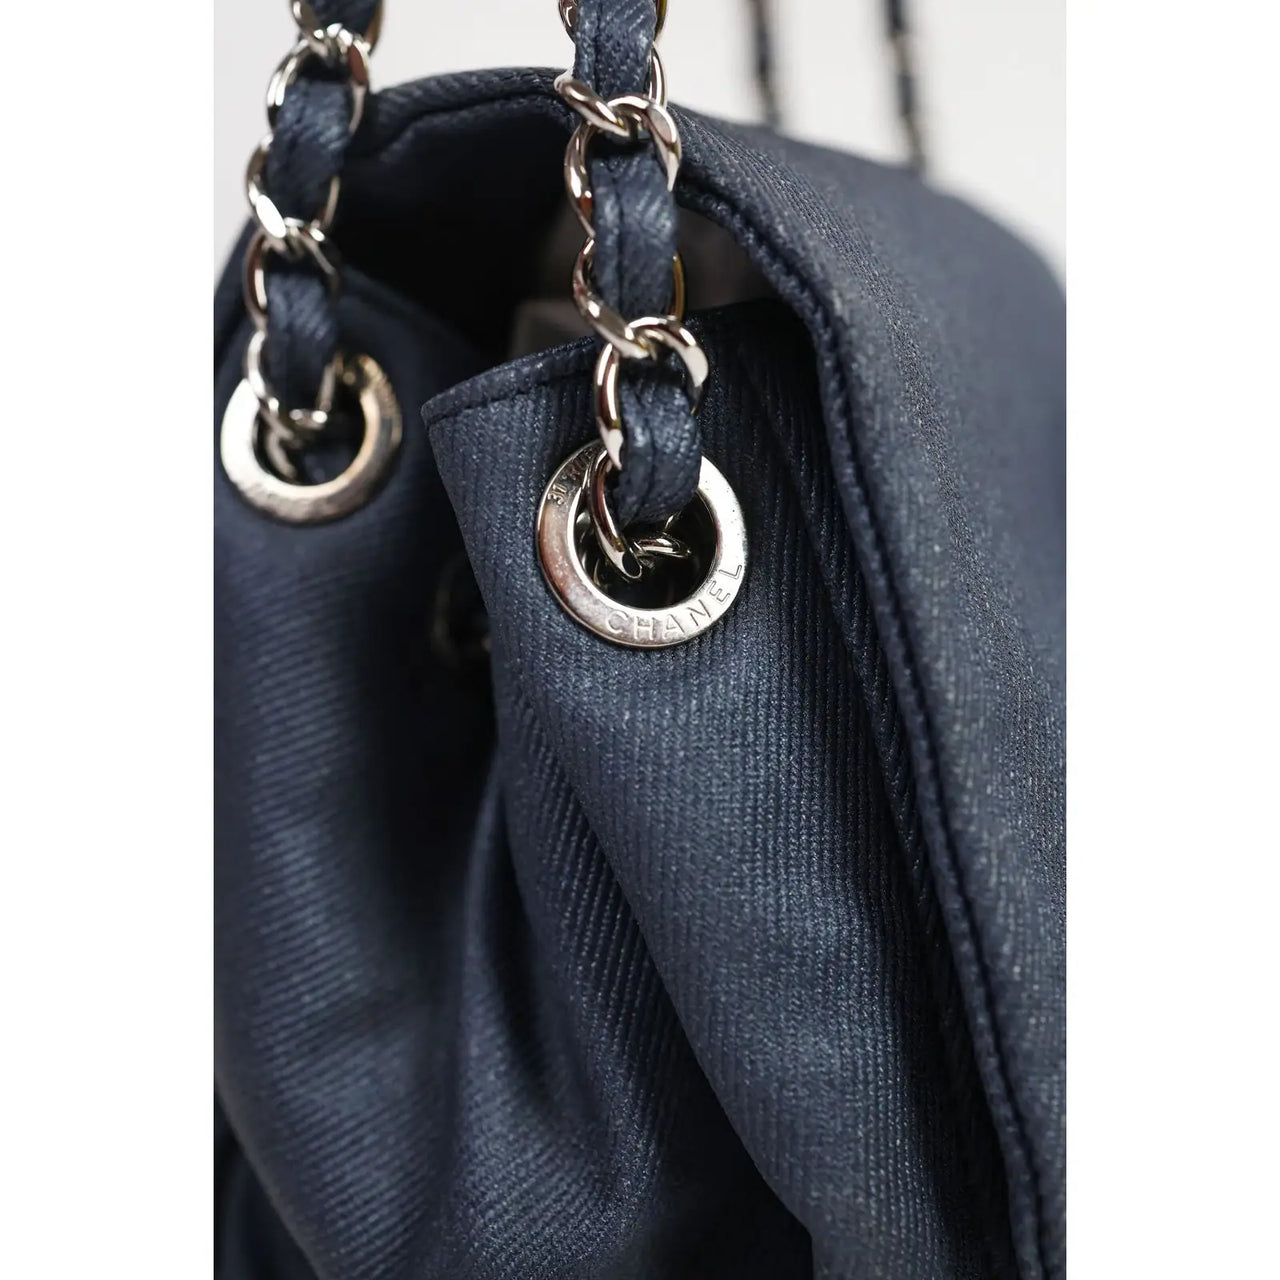 chanel navy blue tote handbag